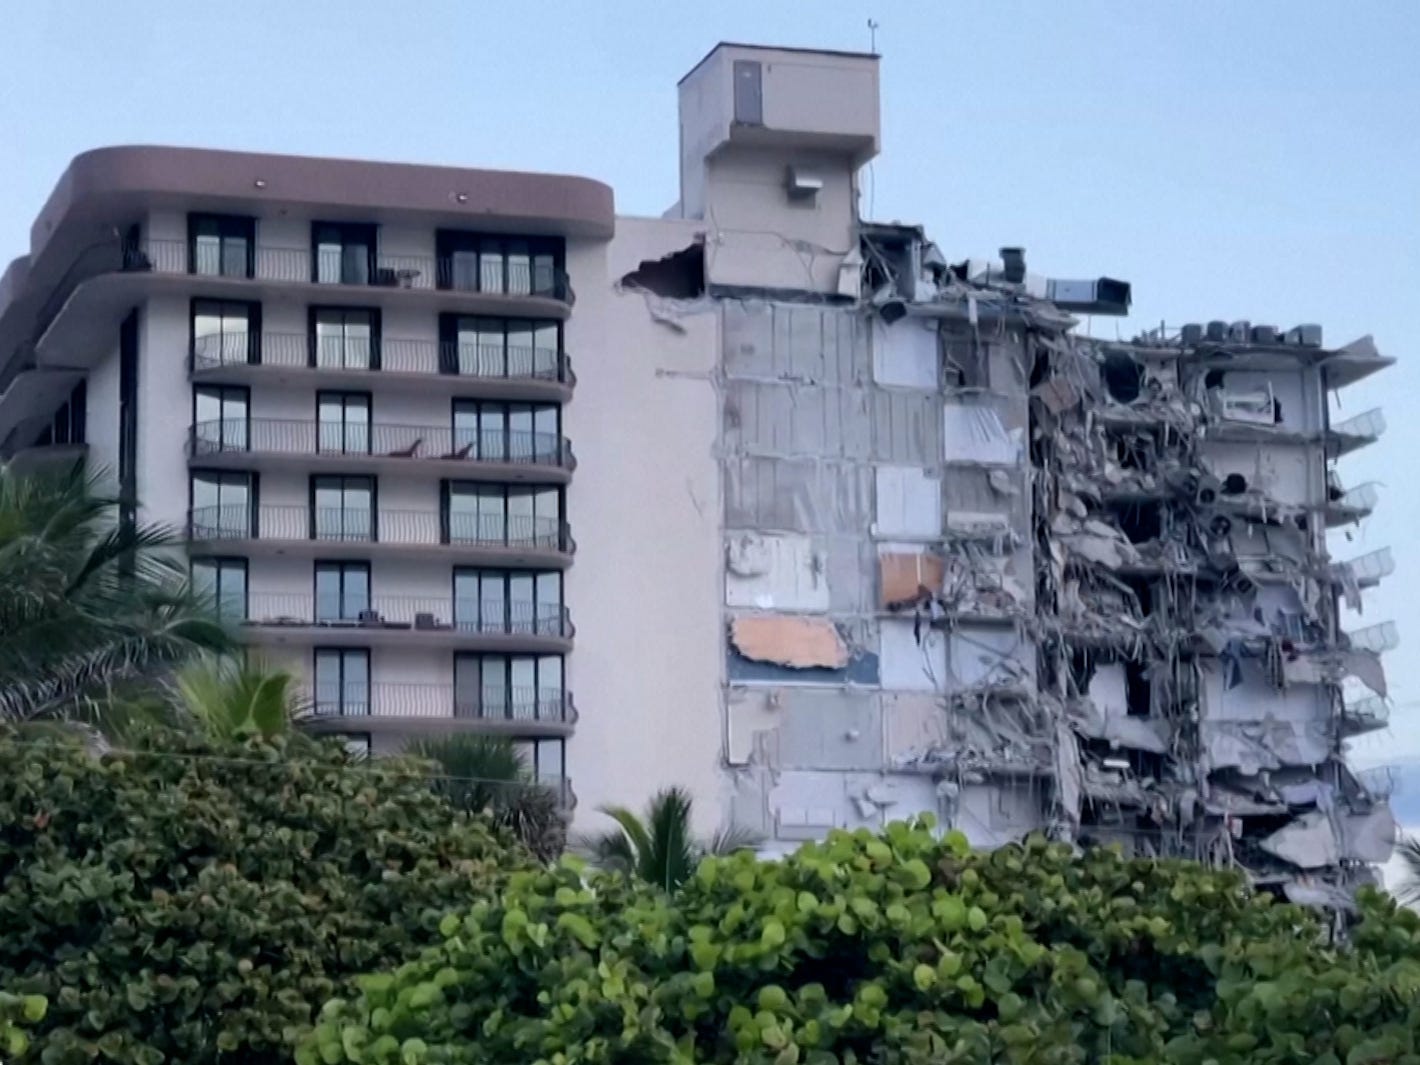 Miami Building collapse